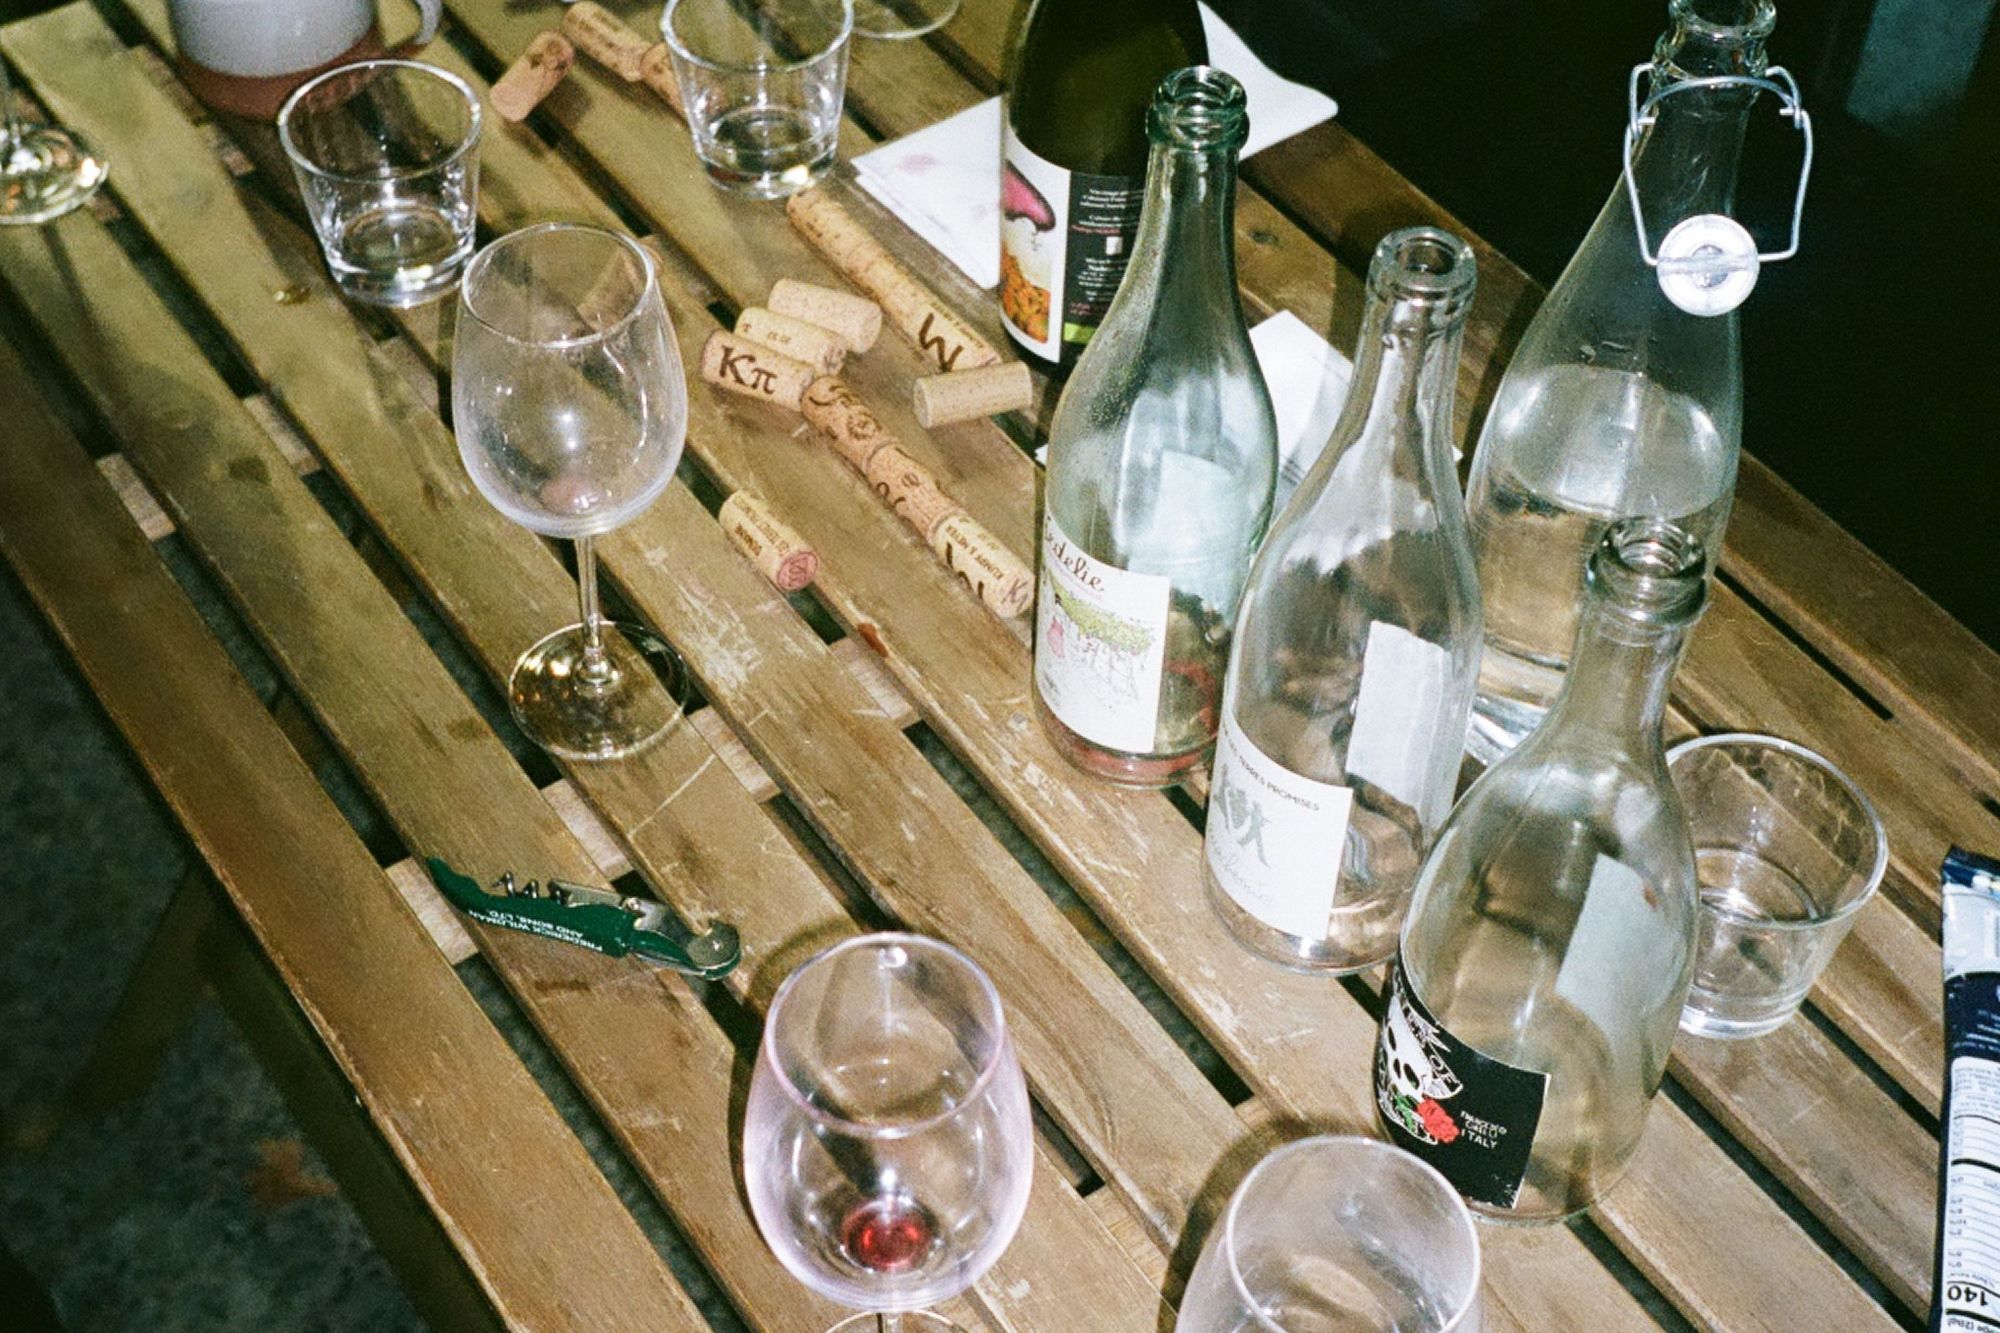 Meet 2 Social Clubs Cultivating Joyful Communities in the Wine Industry